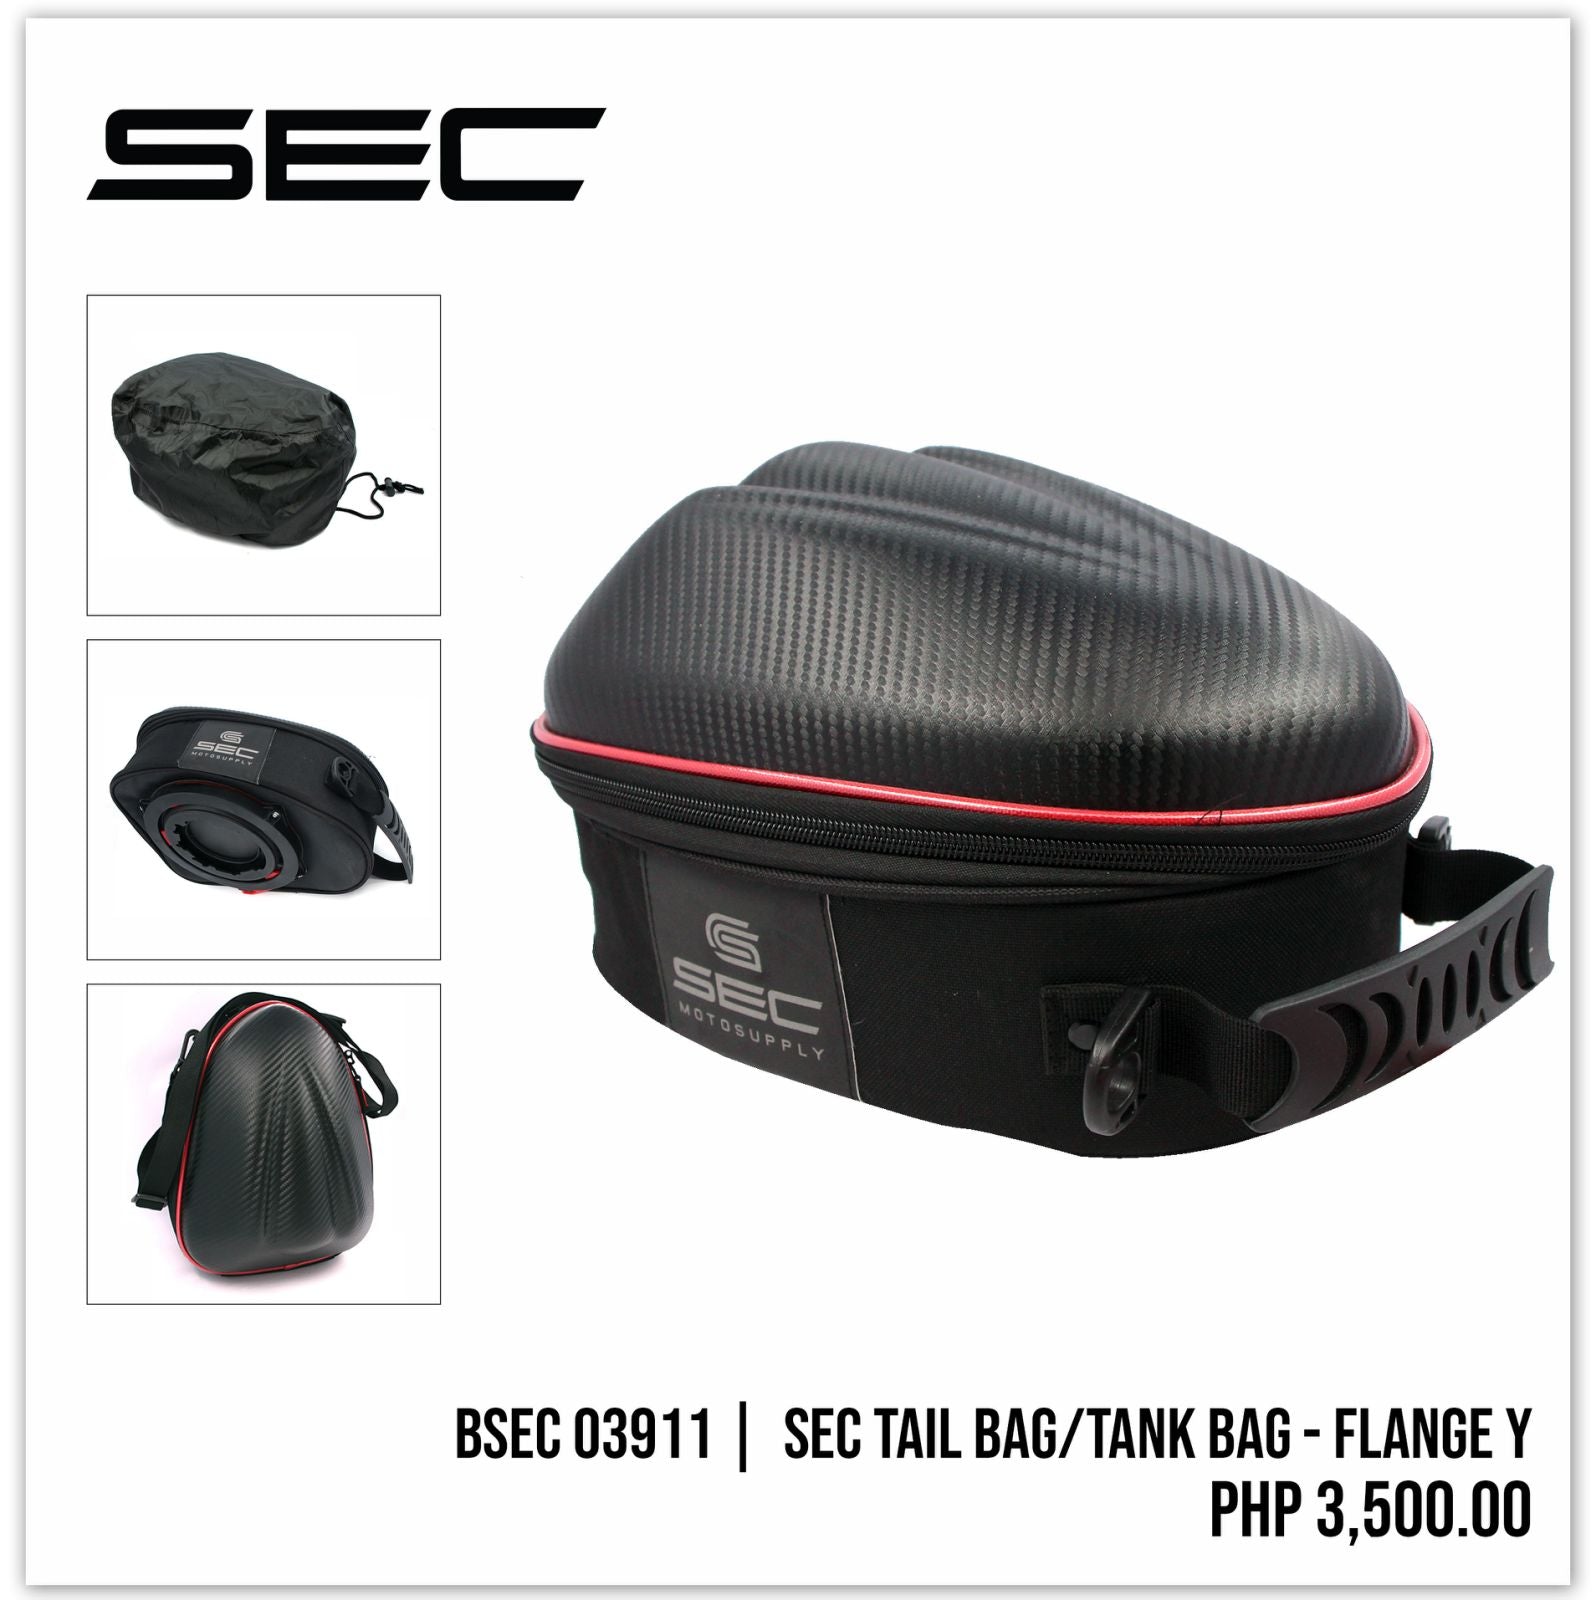 SEC Tail Bag/Tank Bag - Flange Y